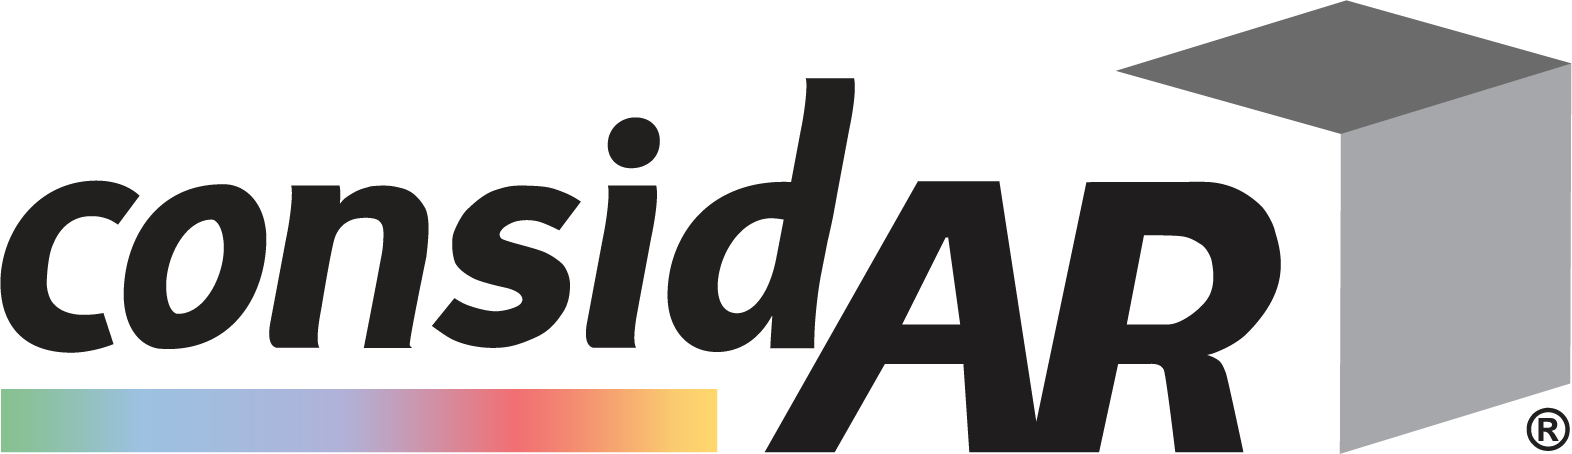 ConsidAR Logo